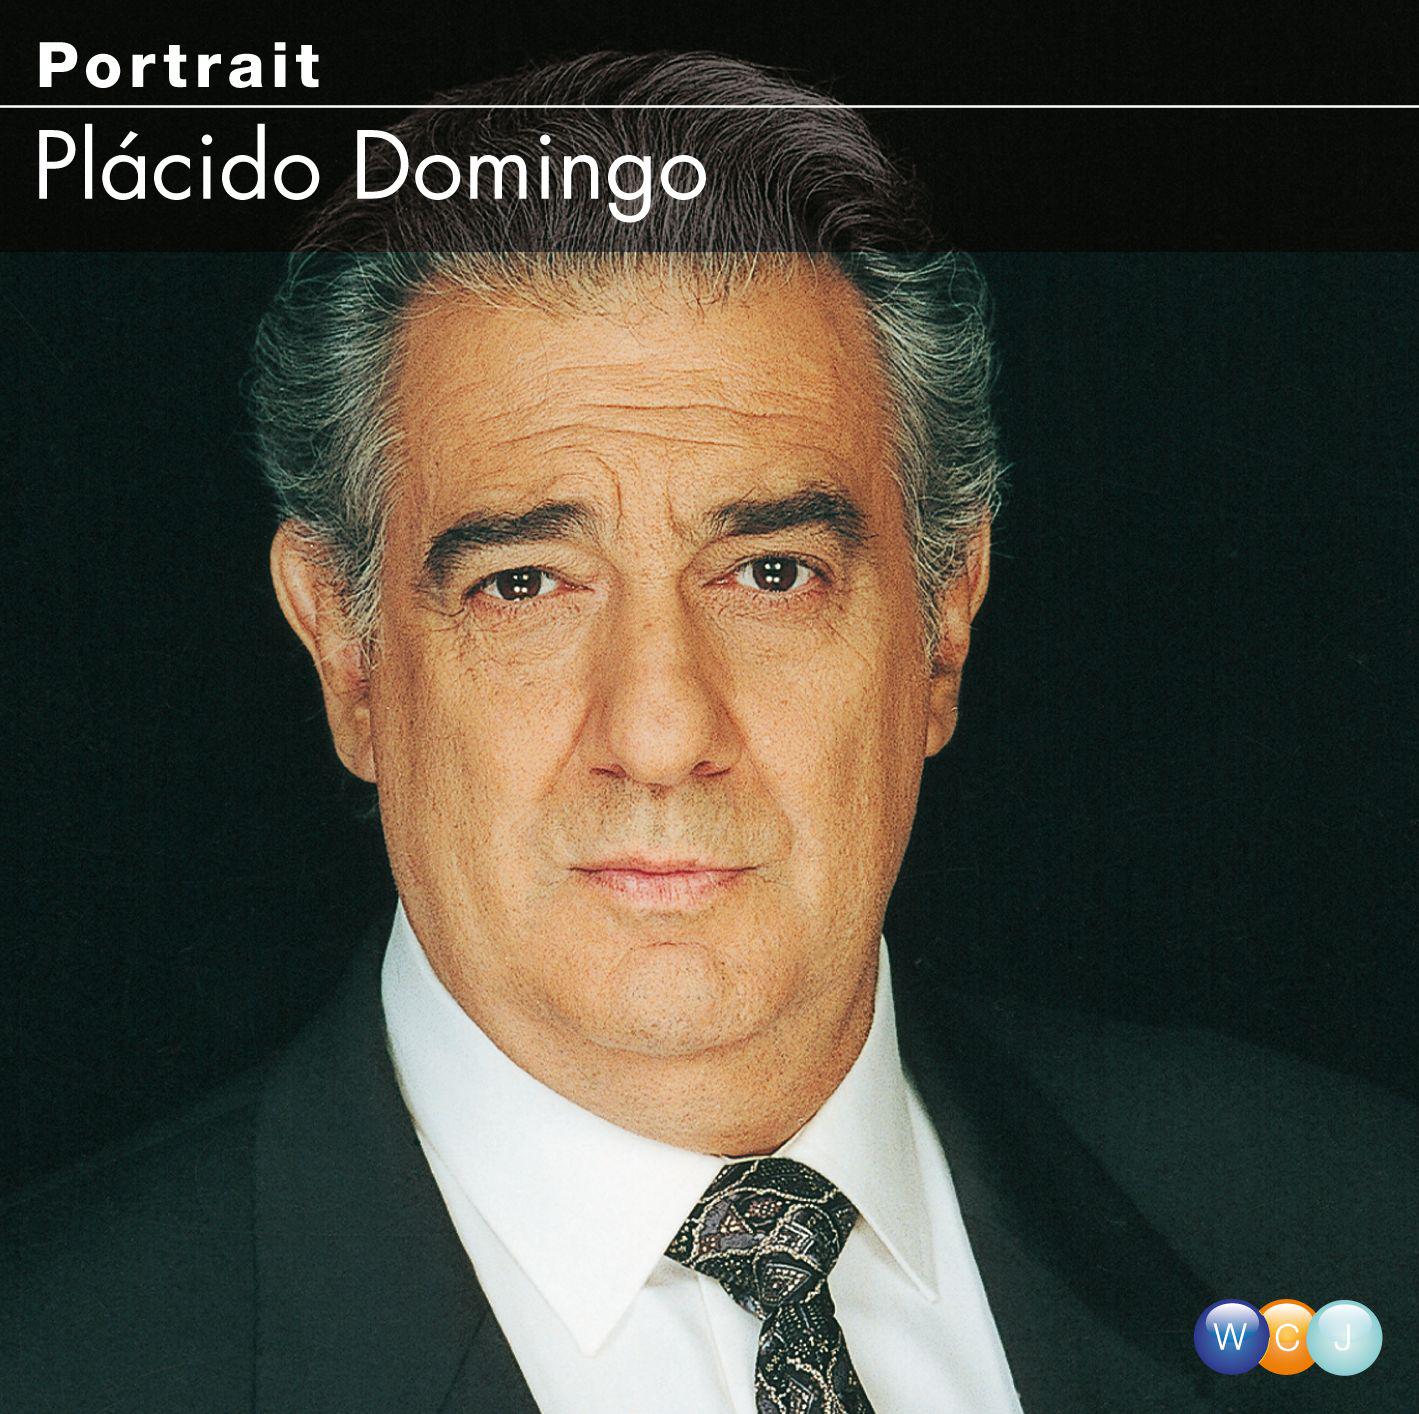 Pla cido Domingo  Artist Portrait 2007